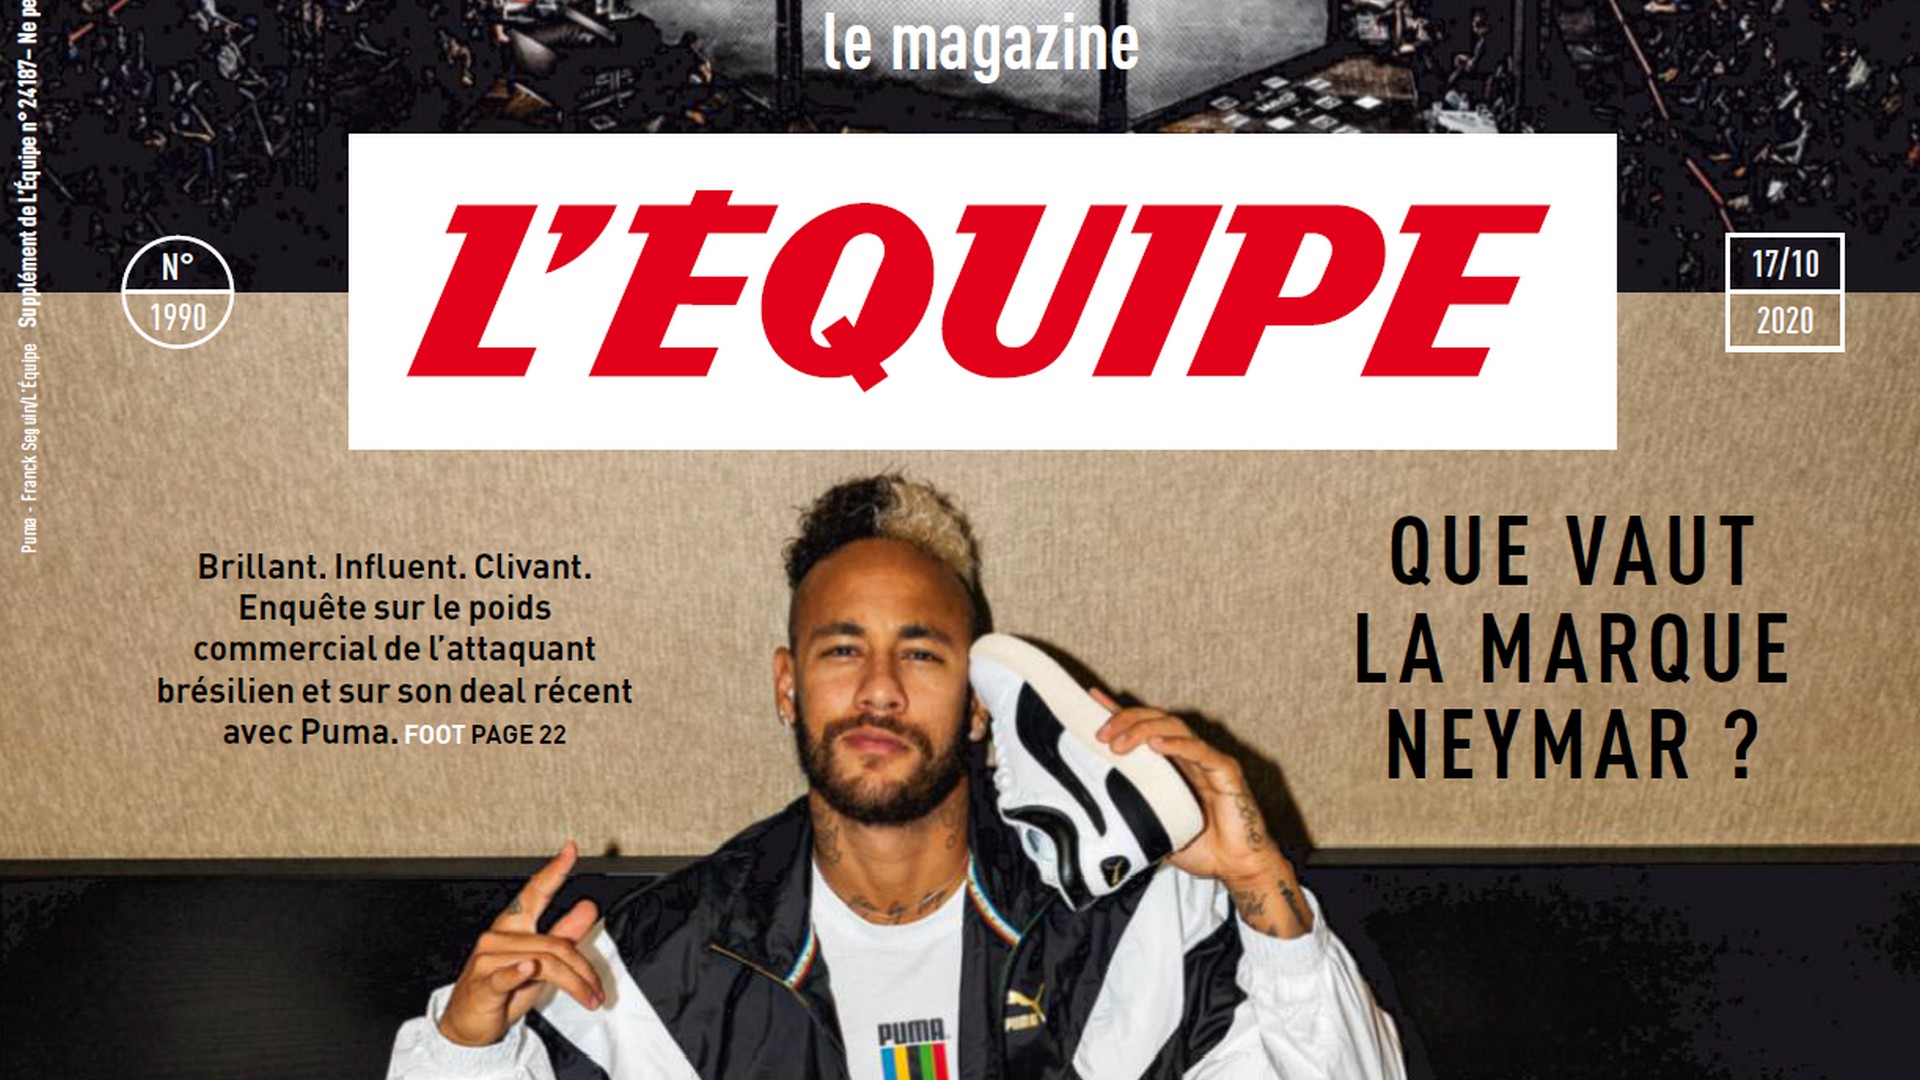 Le magazine L'Equipe – Neymar